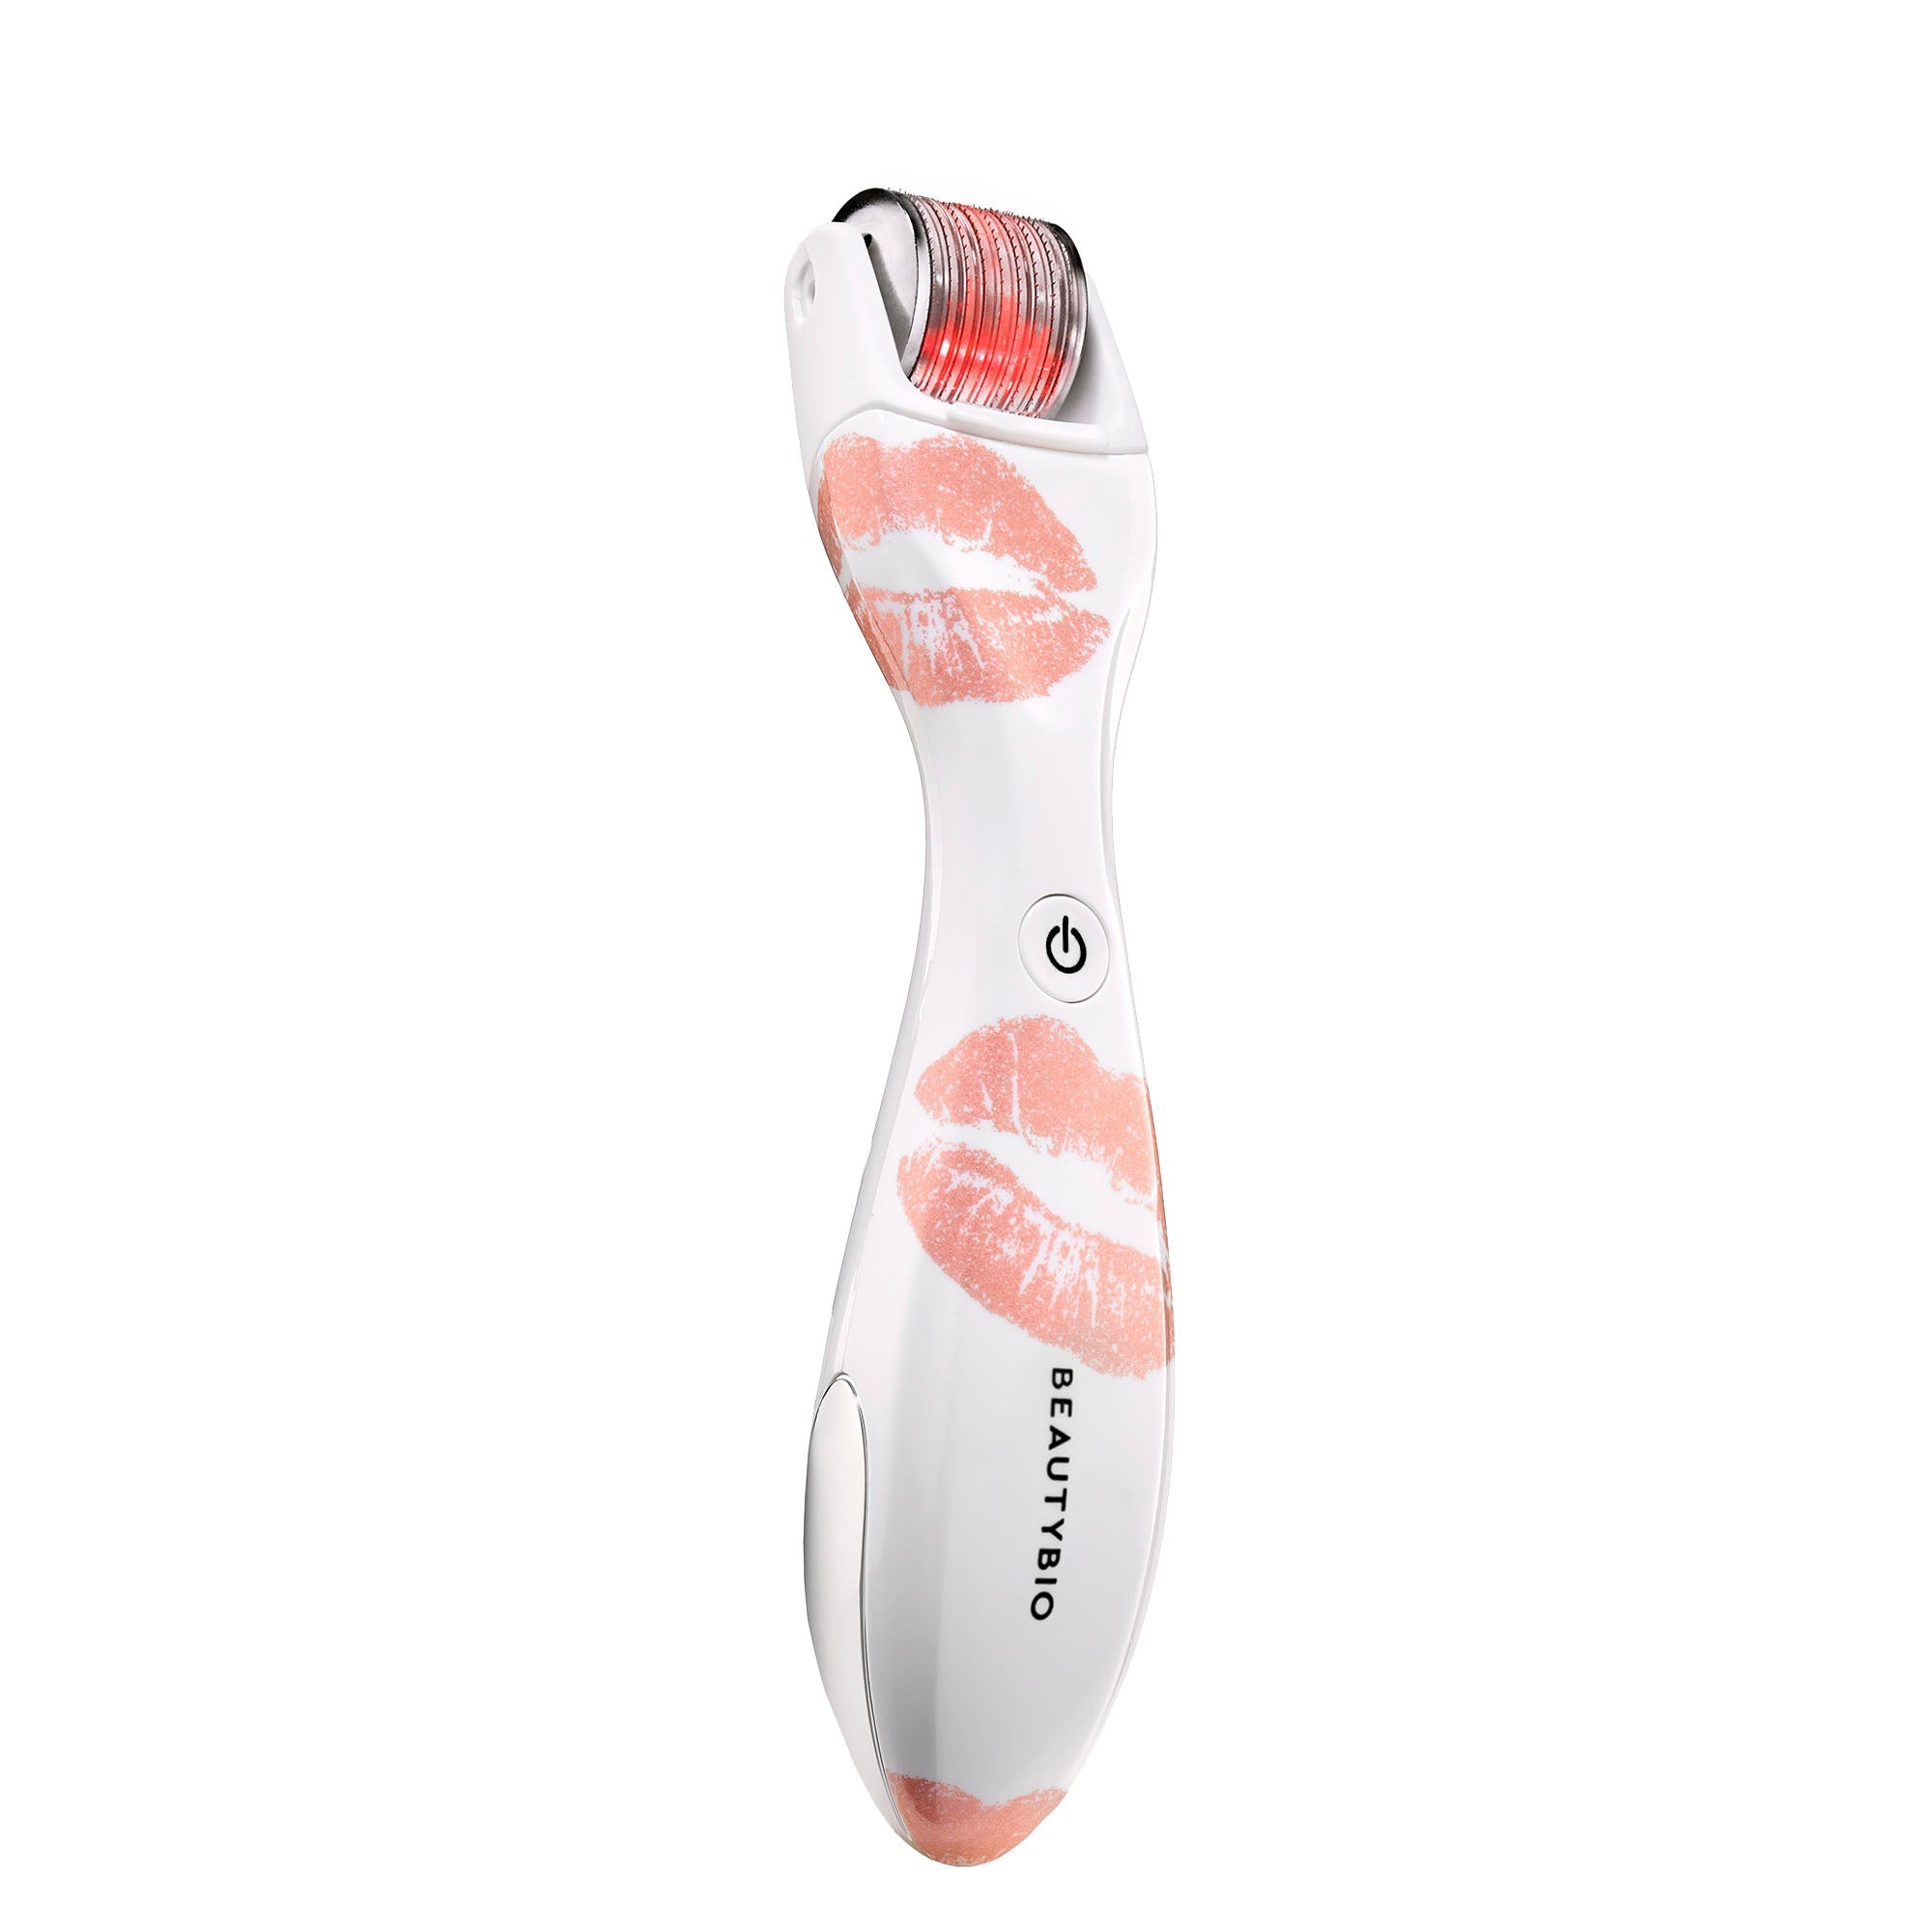 GloPRO® At-Home Microneedling Tool - Blush Kisses